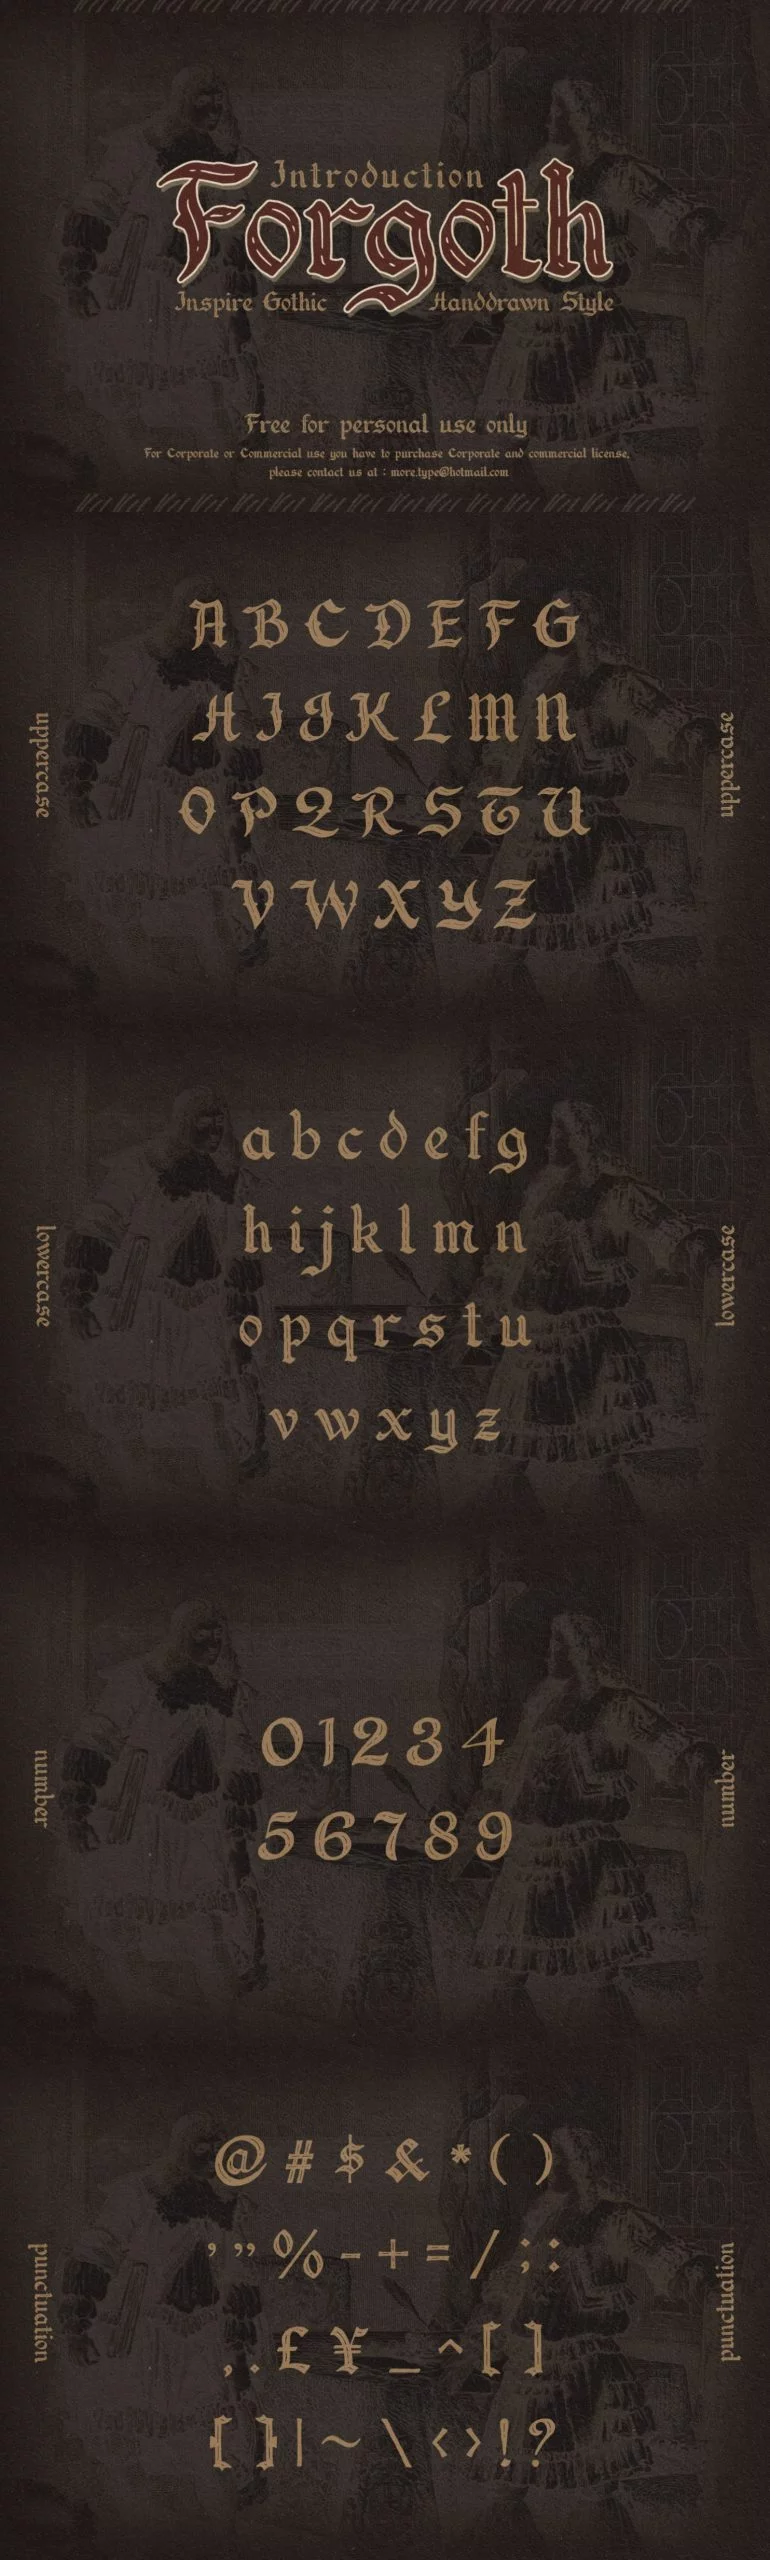 Free Forgoth Typeface